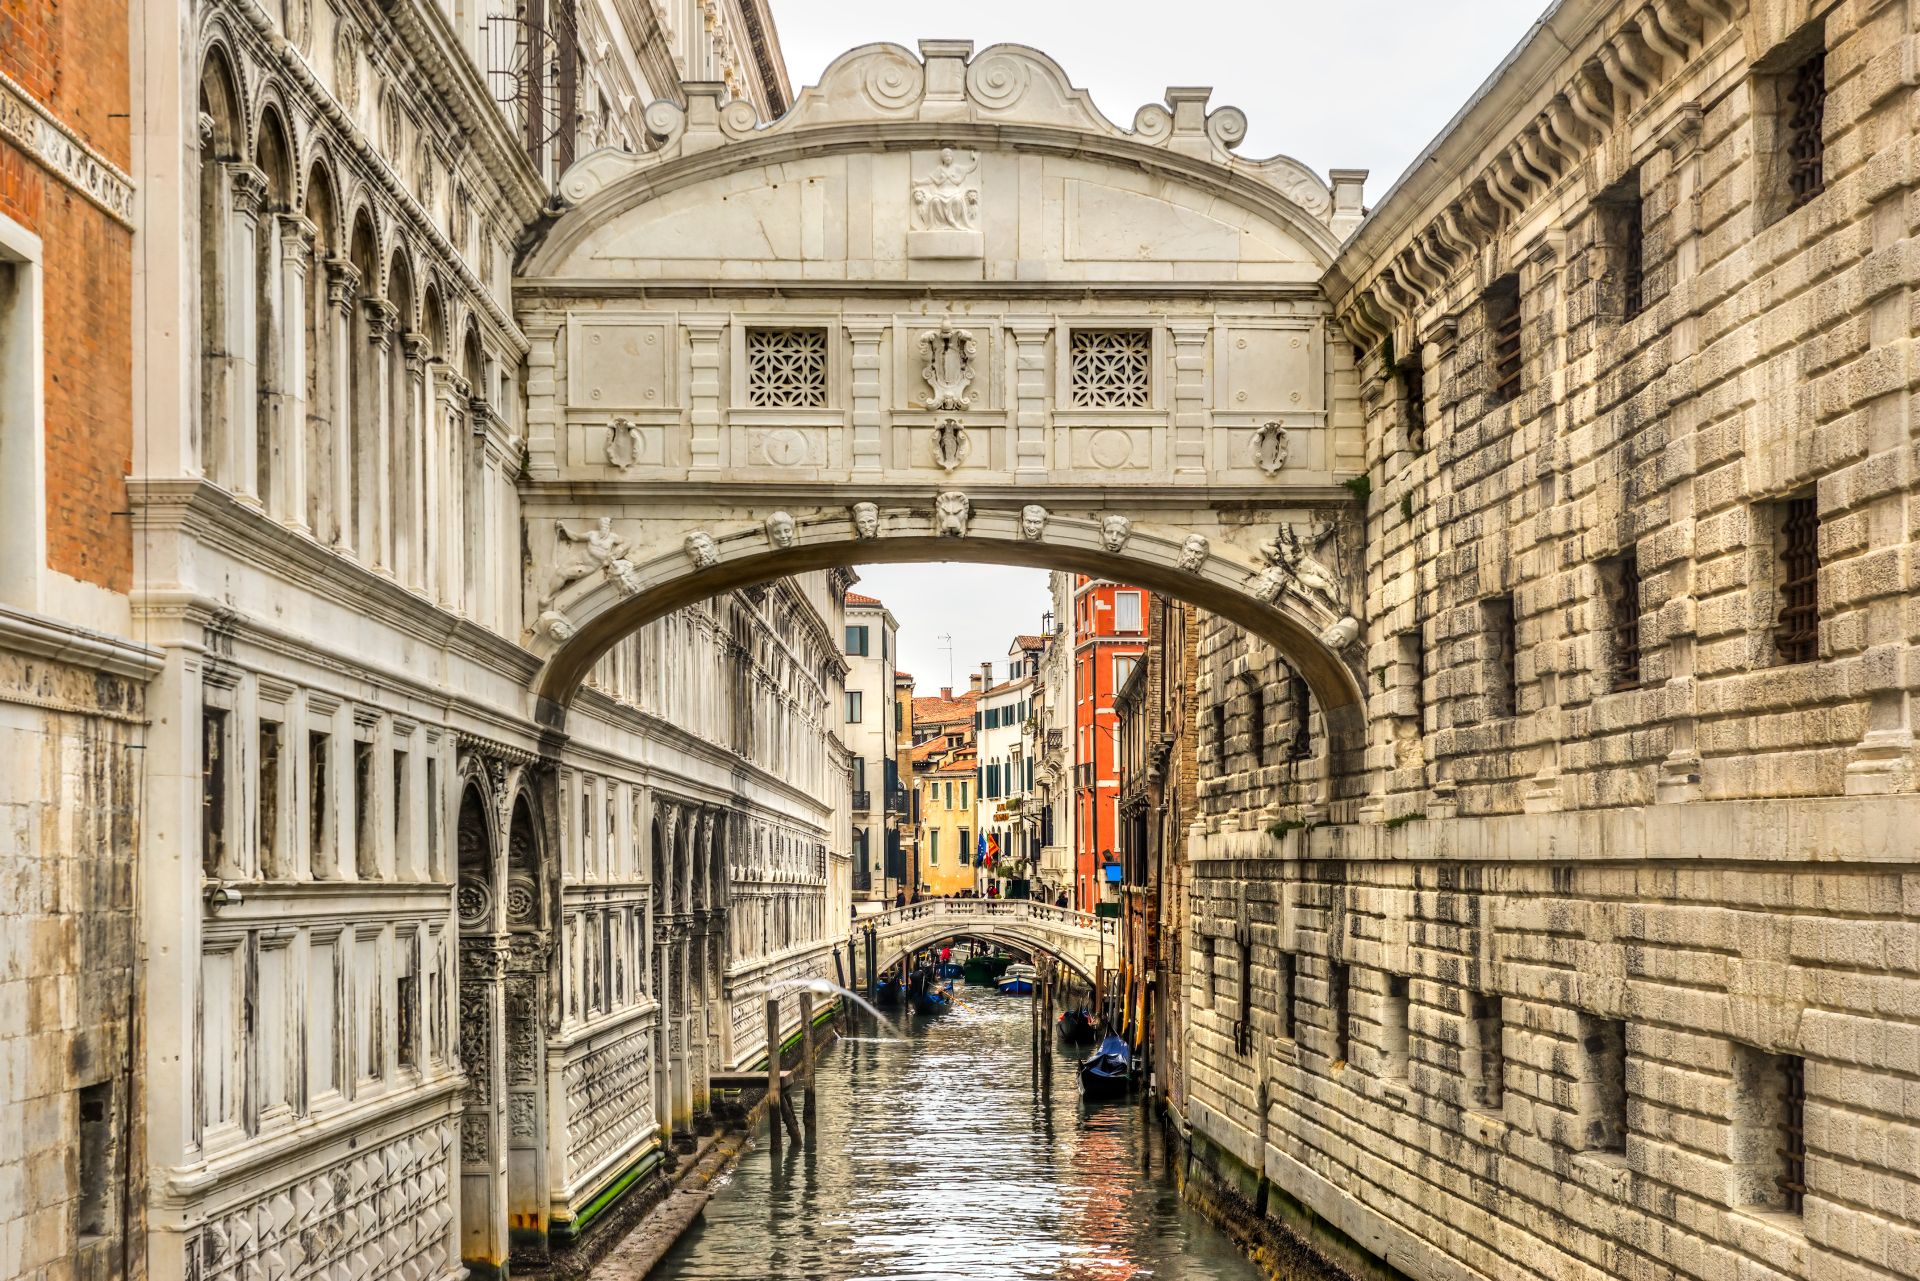 Ponte-dei-Sospiri-in-Venice-Italy